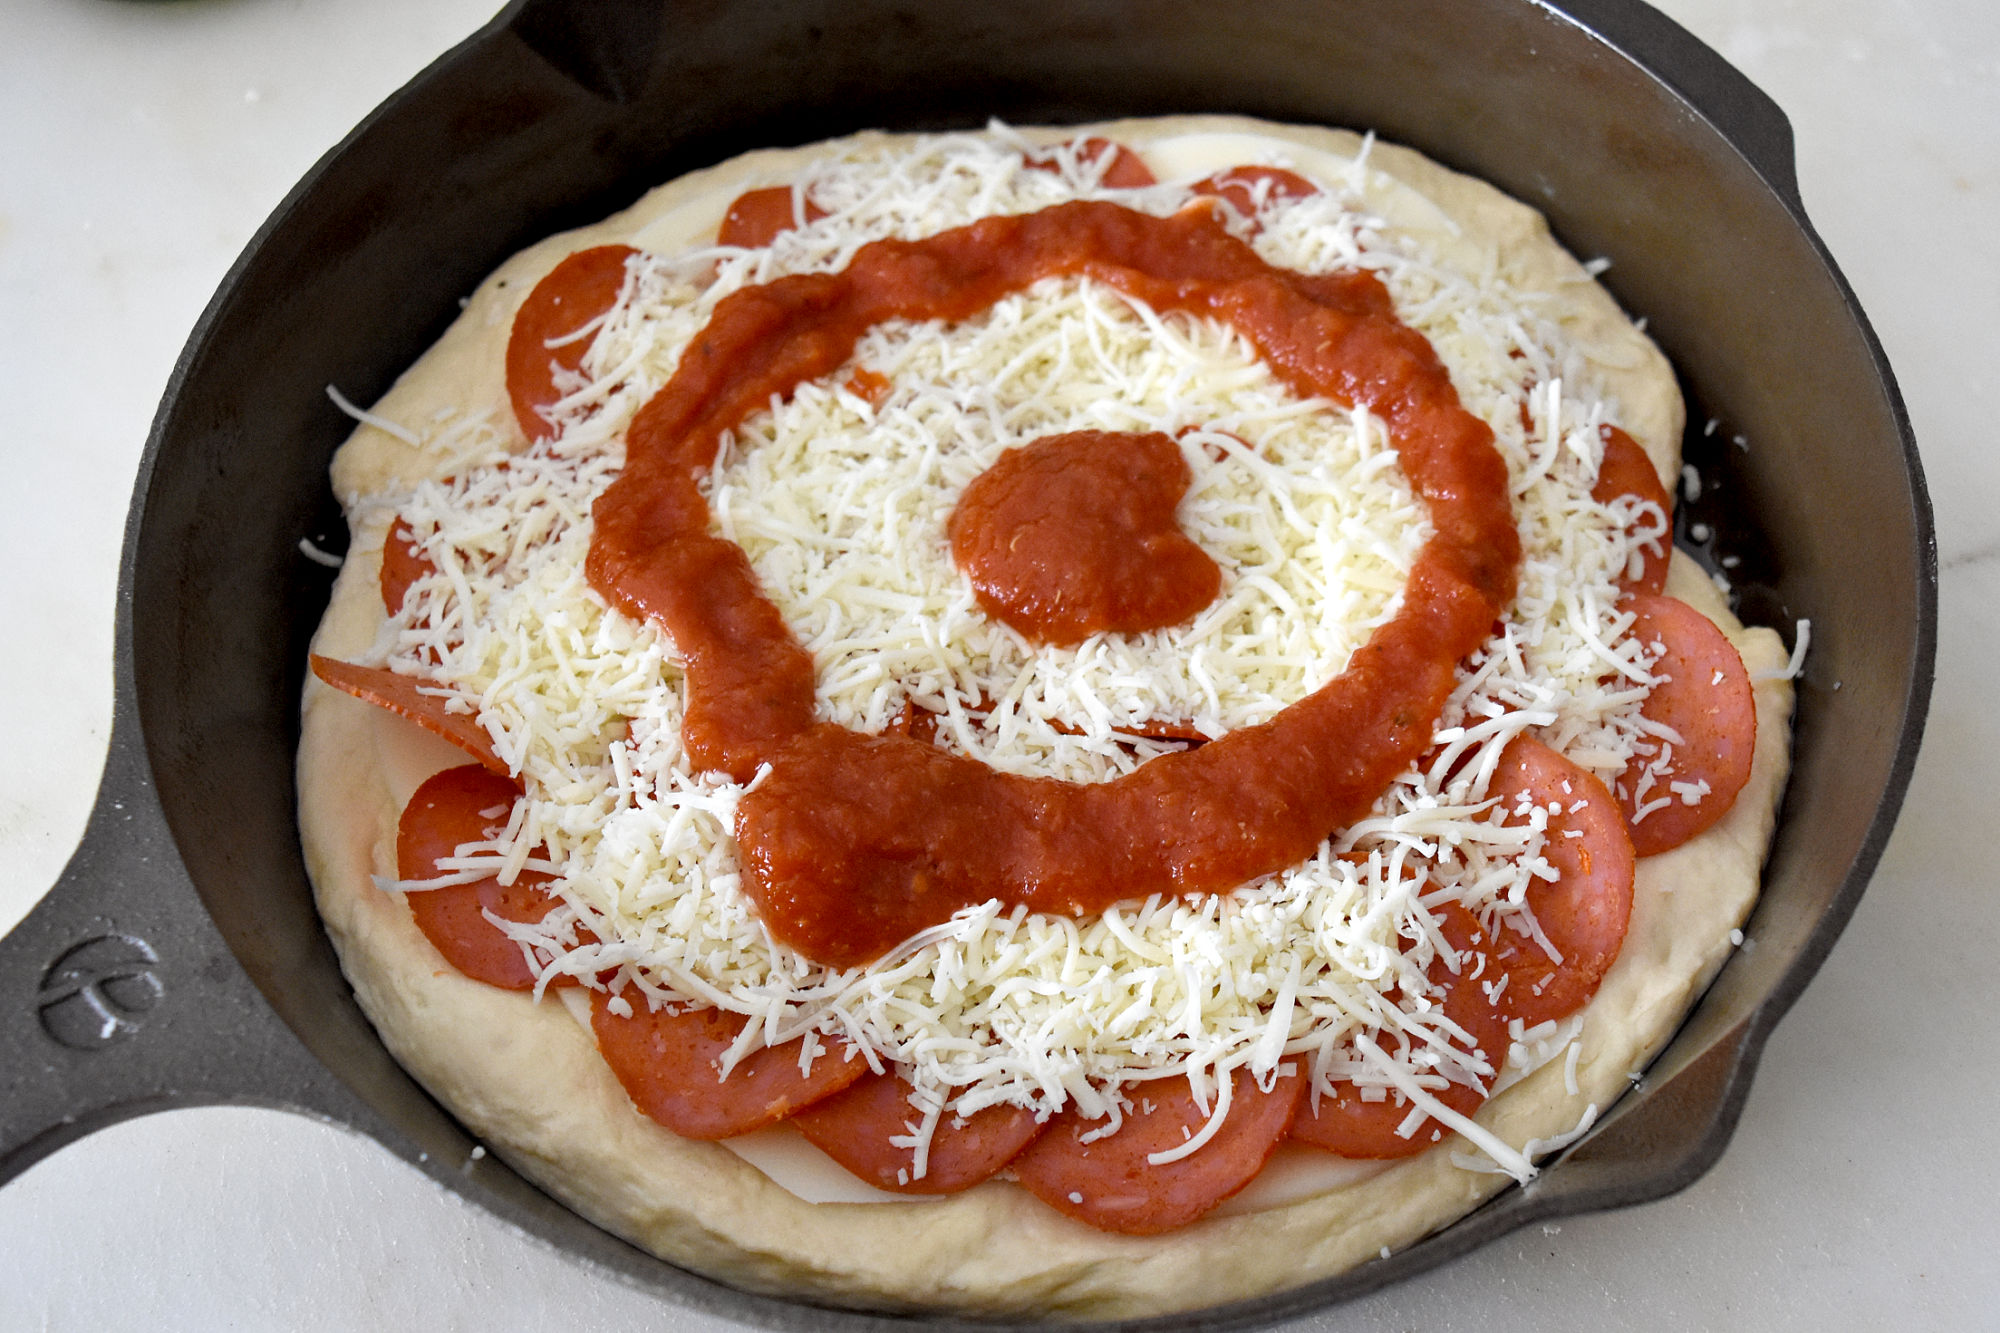 A bullseye of sauce tops this Detroit Style Deep Dish Pizza.